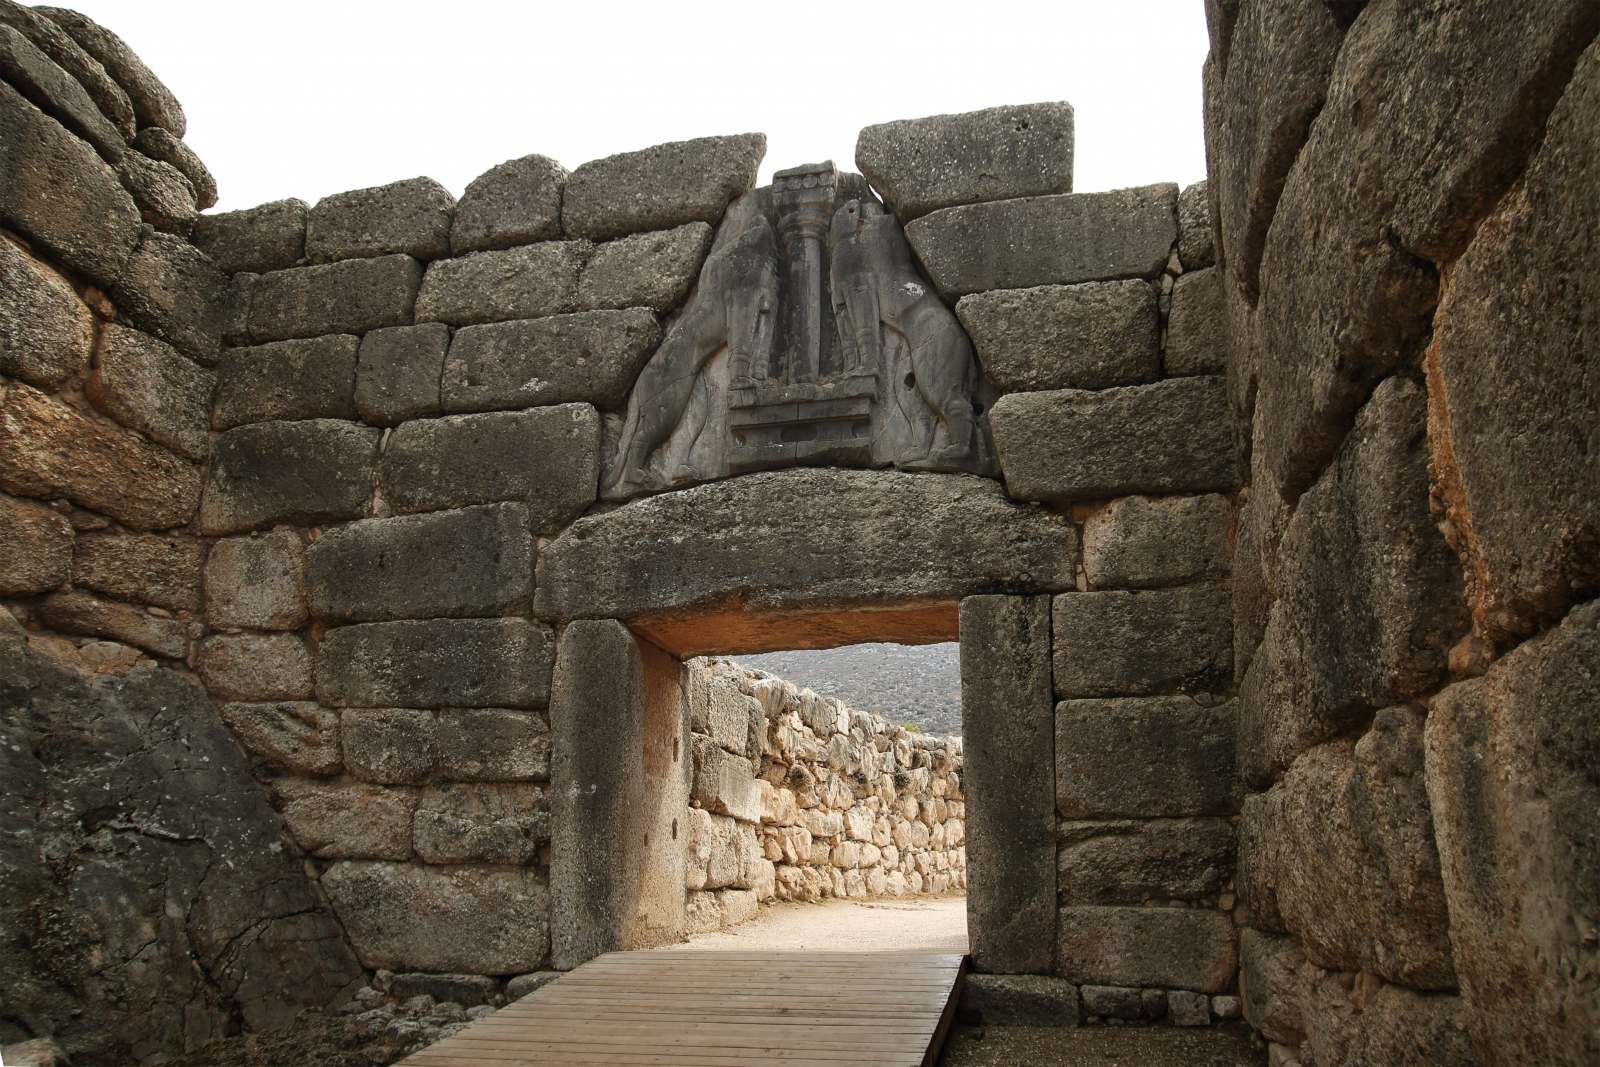 Mycenae Lions gate Destinations Tours in Greece Peloponnese Epos Travel Tours